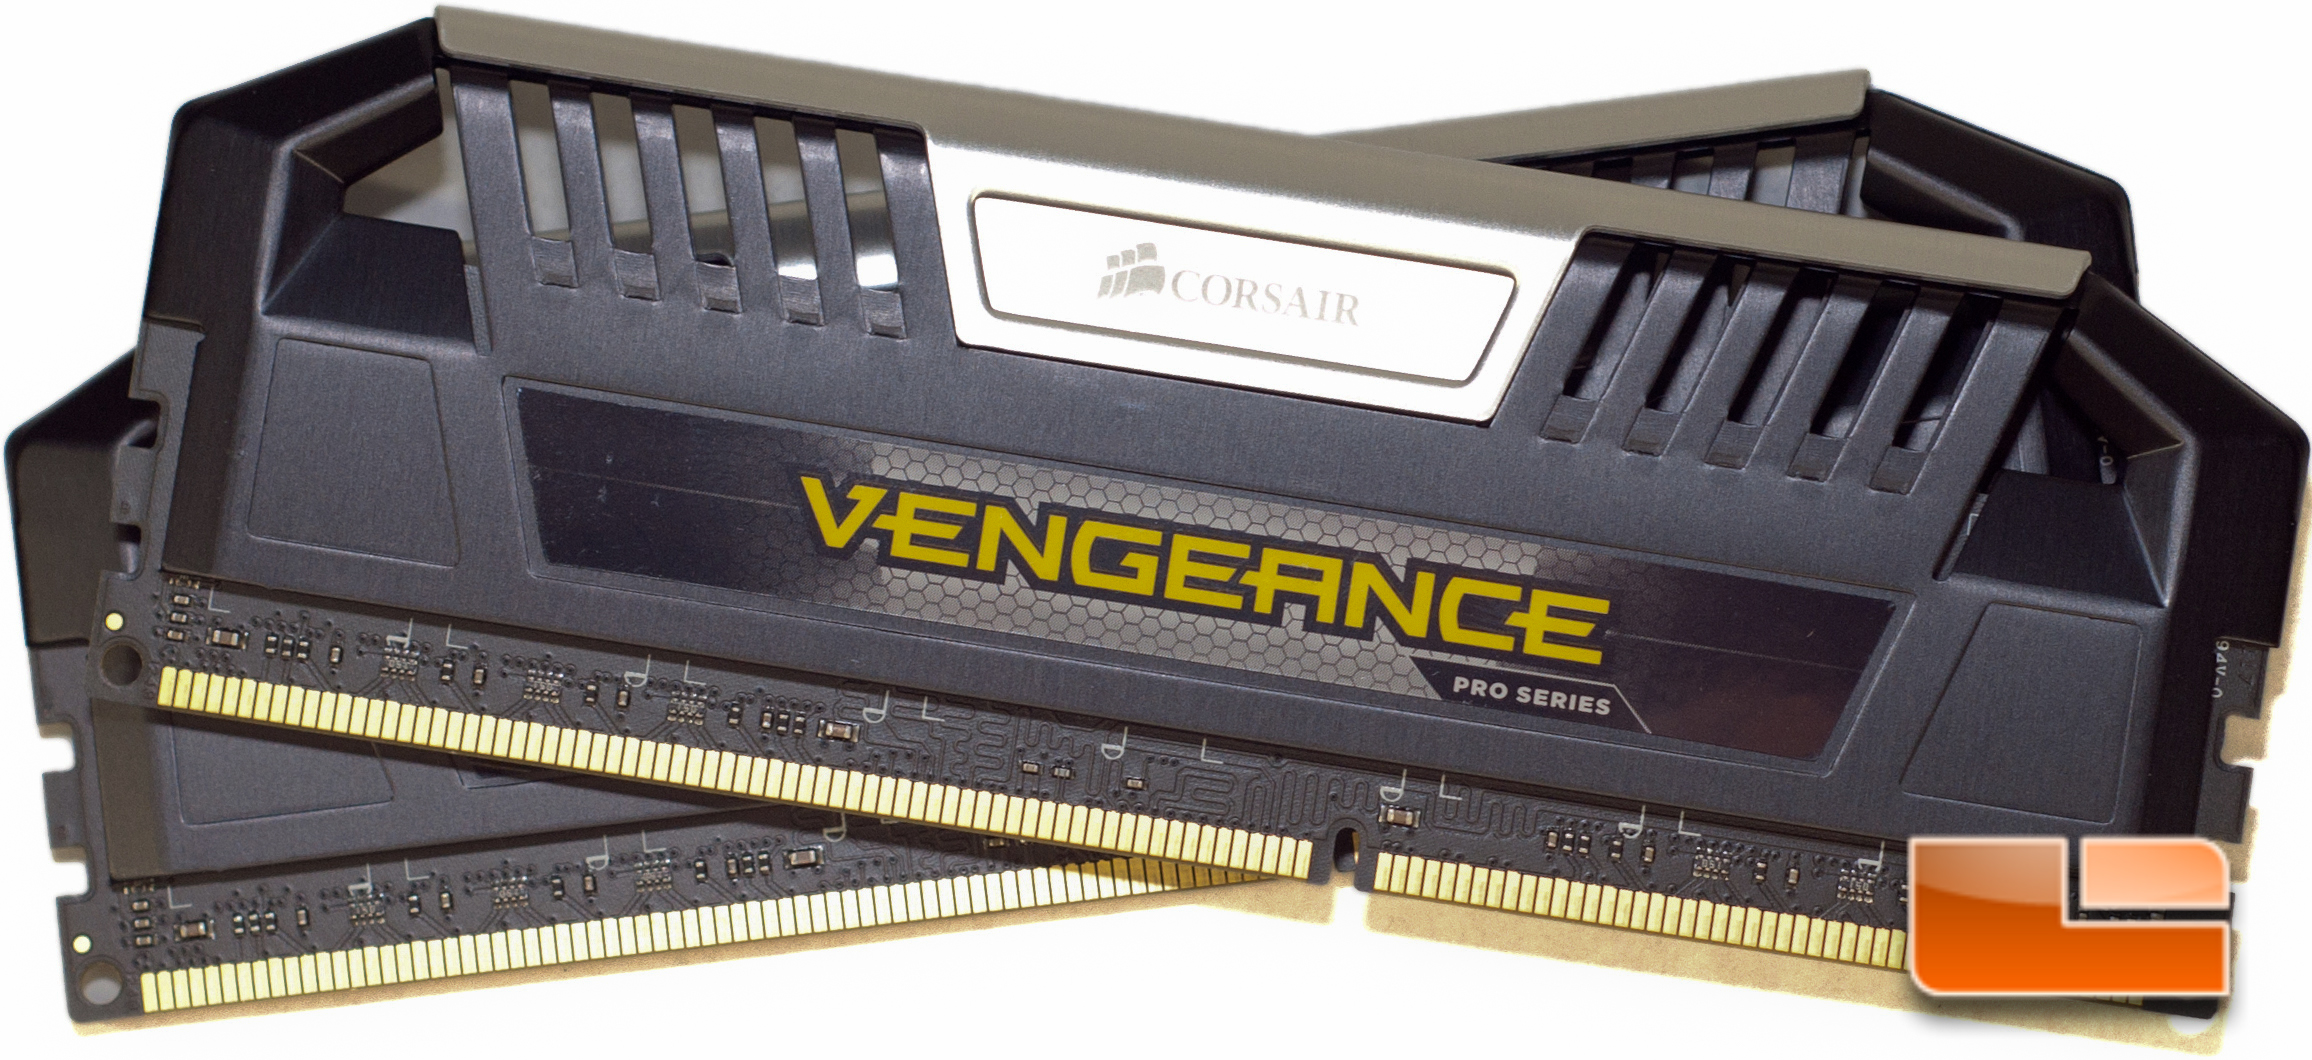 Corsair Vengeance Pro Series 16GB 1866MHz Memory Kit Review - Legit Reviews